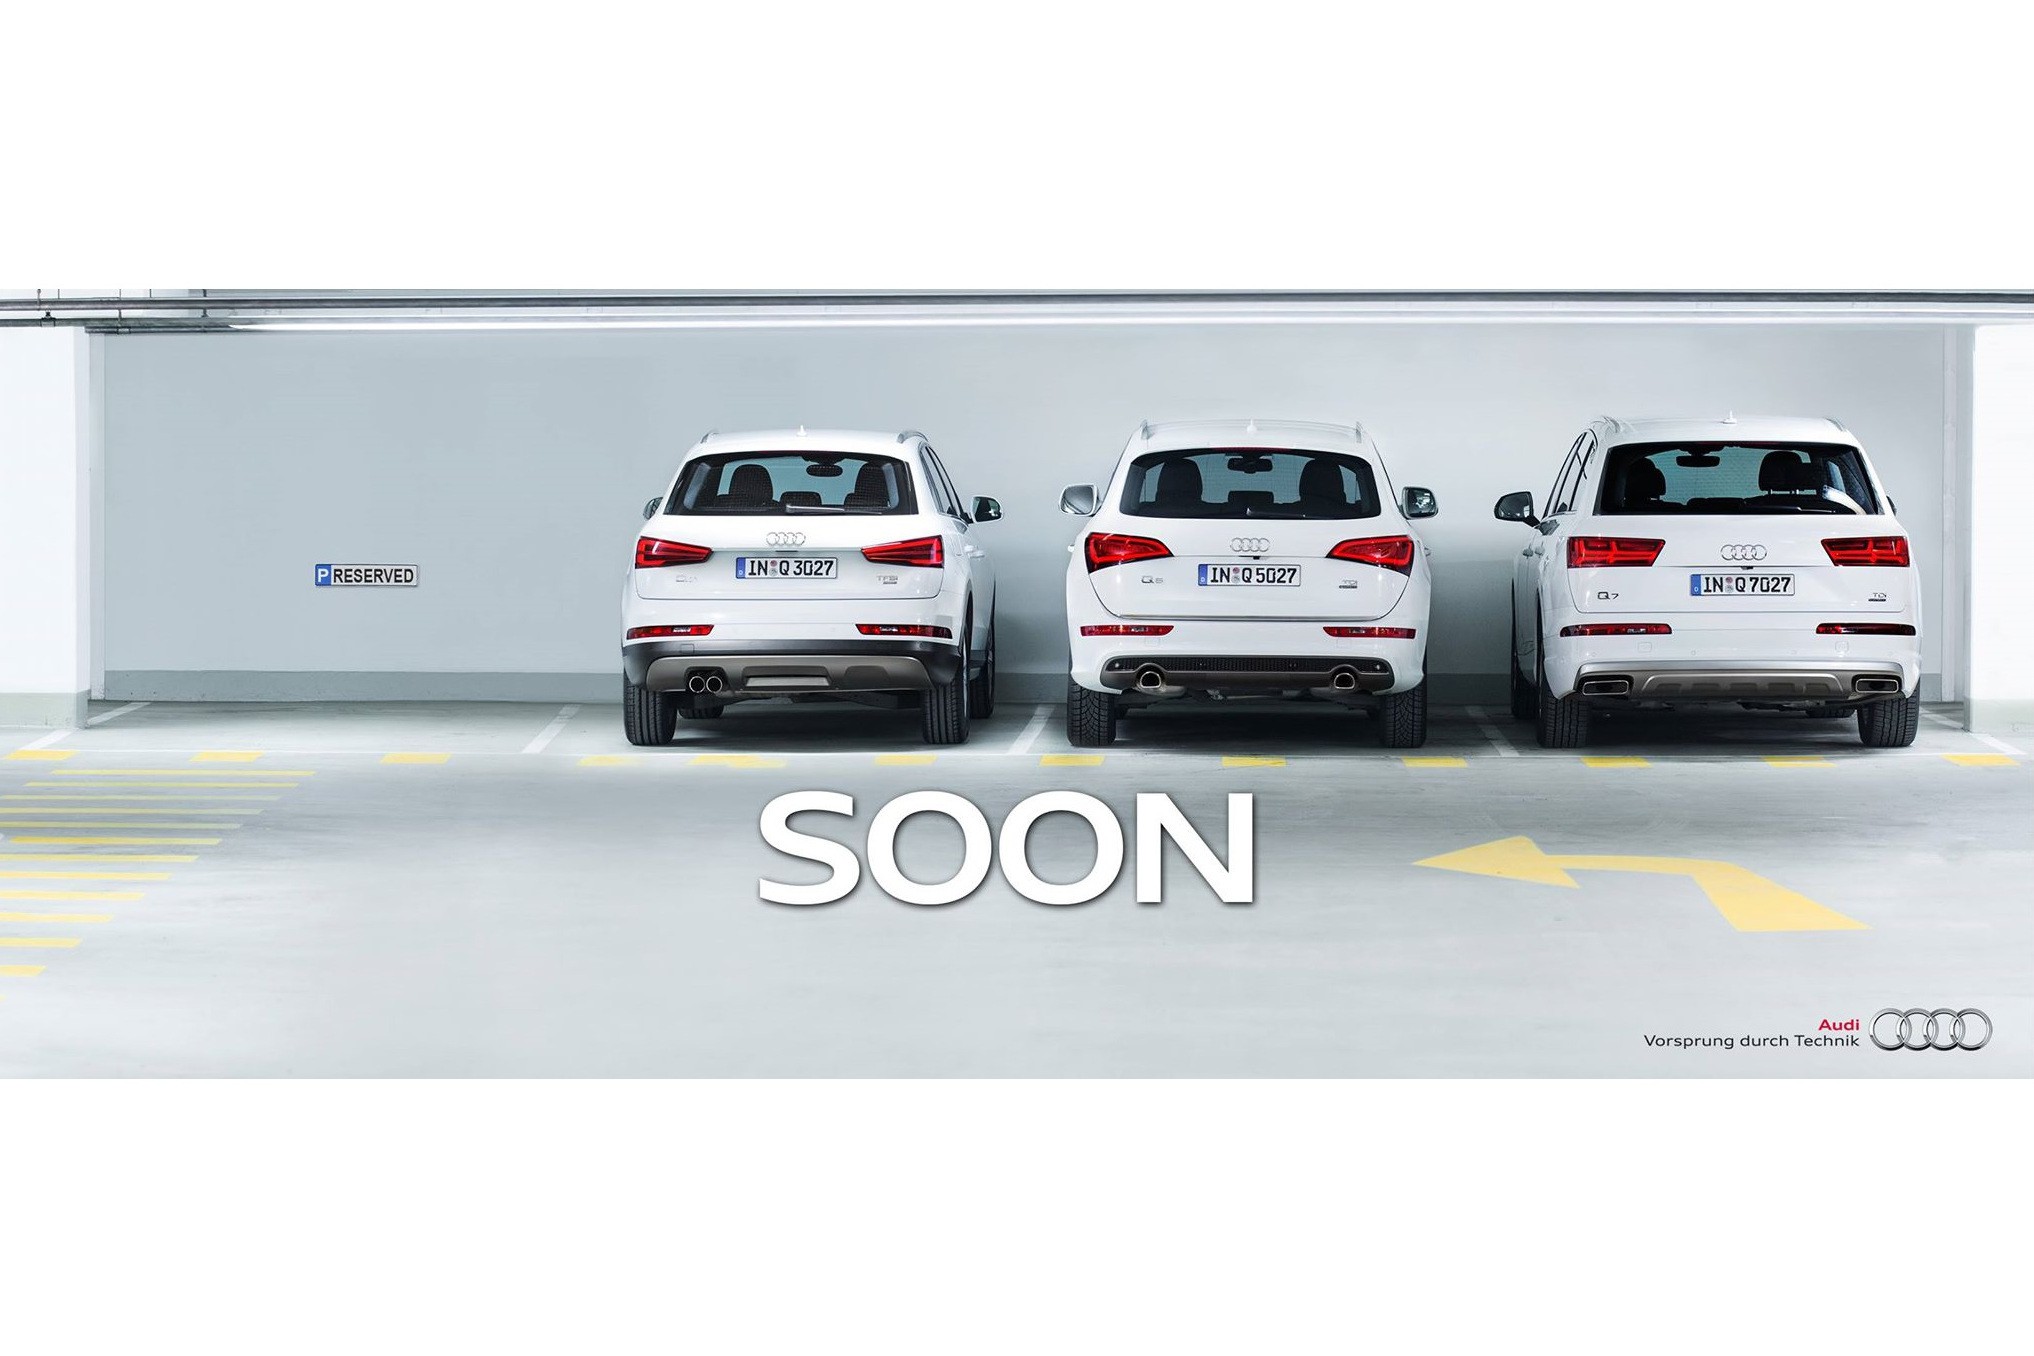 ¿Es tu plaza de parking, Audi Q2? Pronto lo averiguaremos